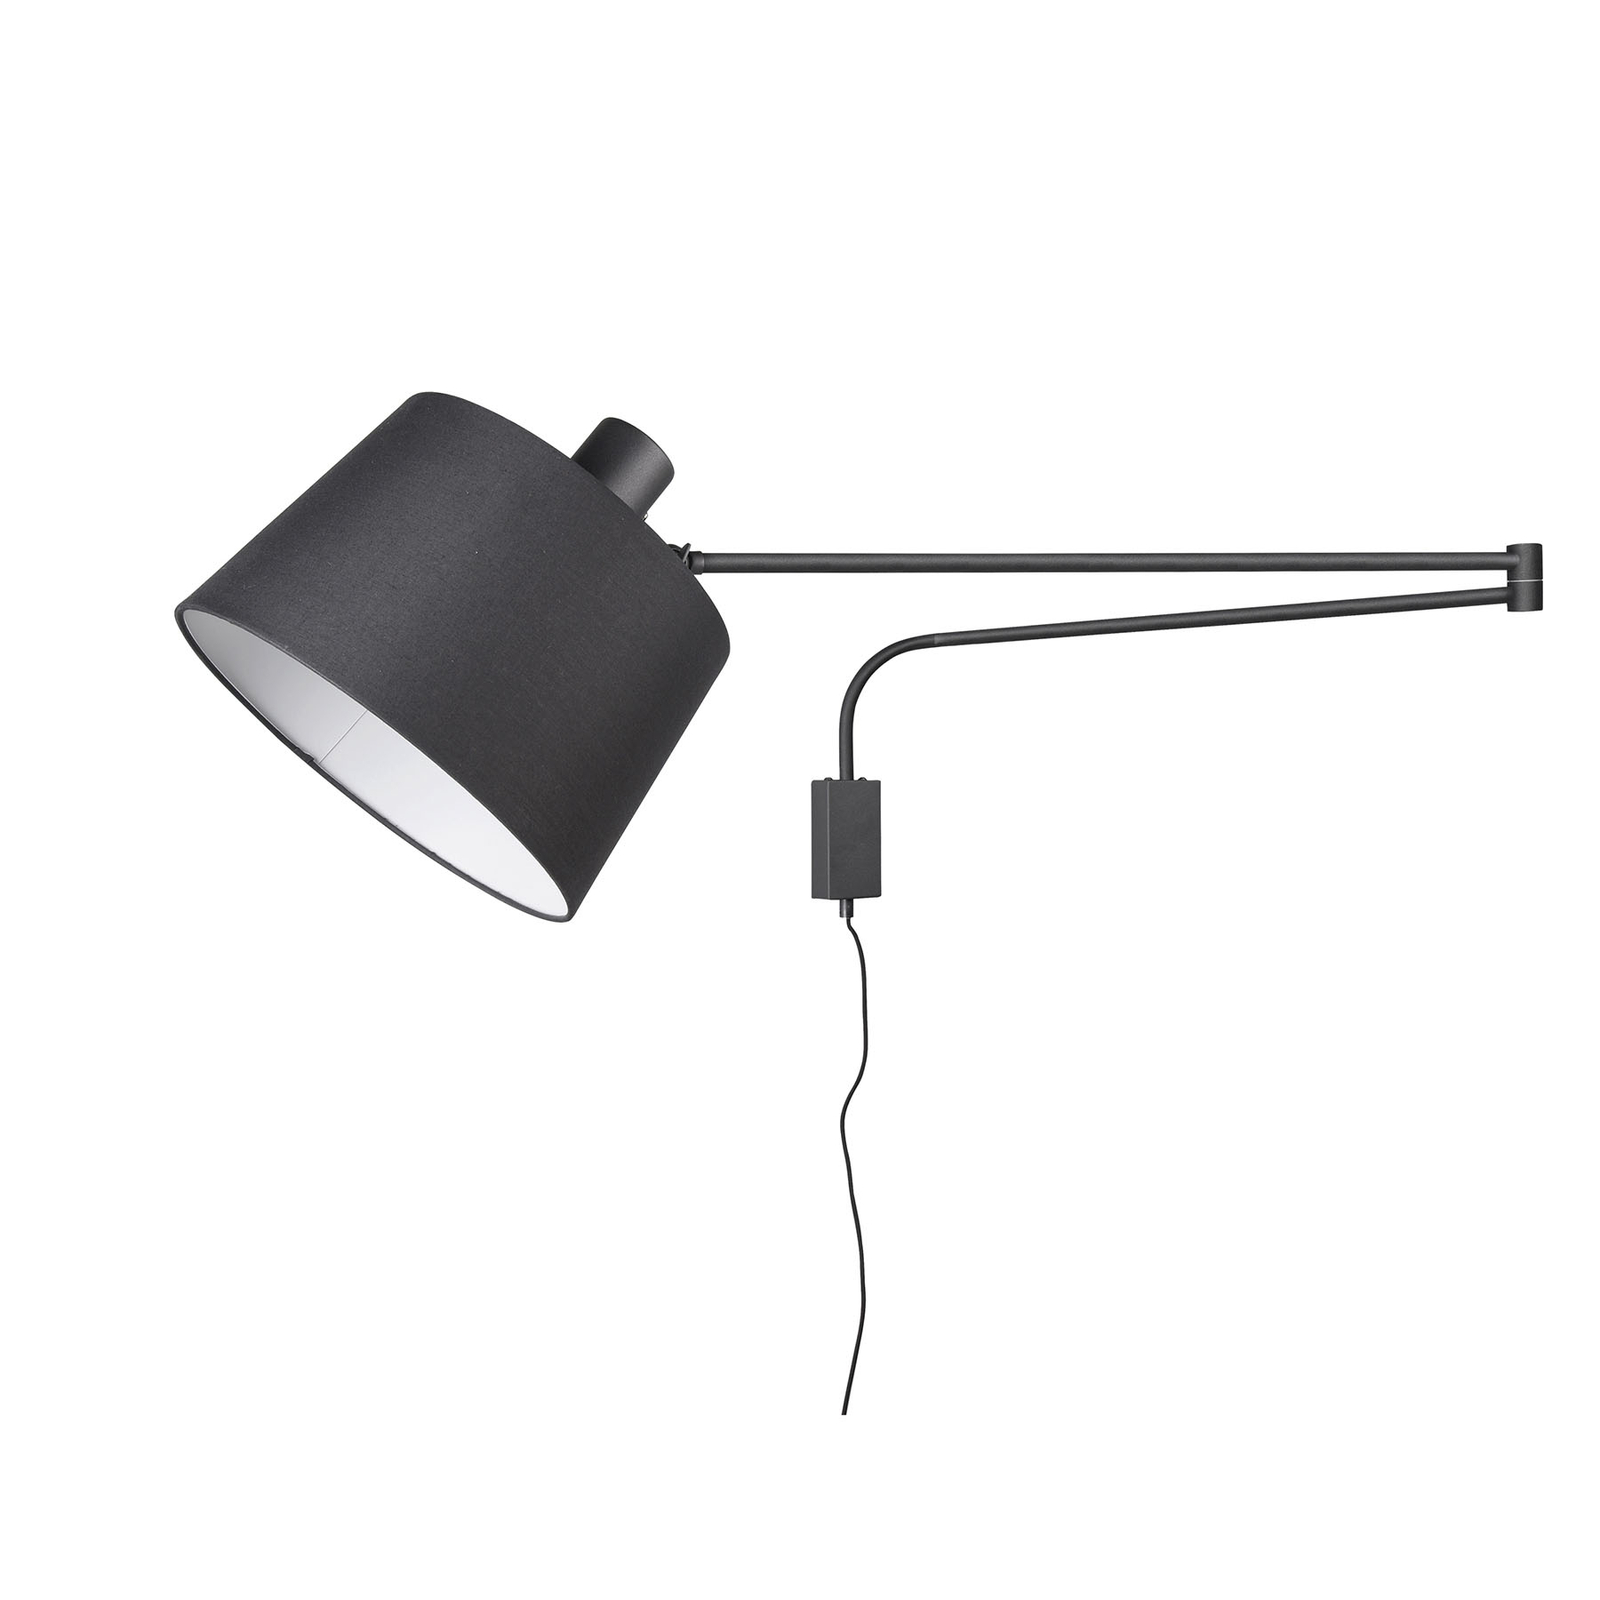 Wandlamp Baldo met kabel + stekker, zwart